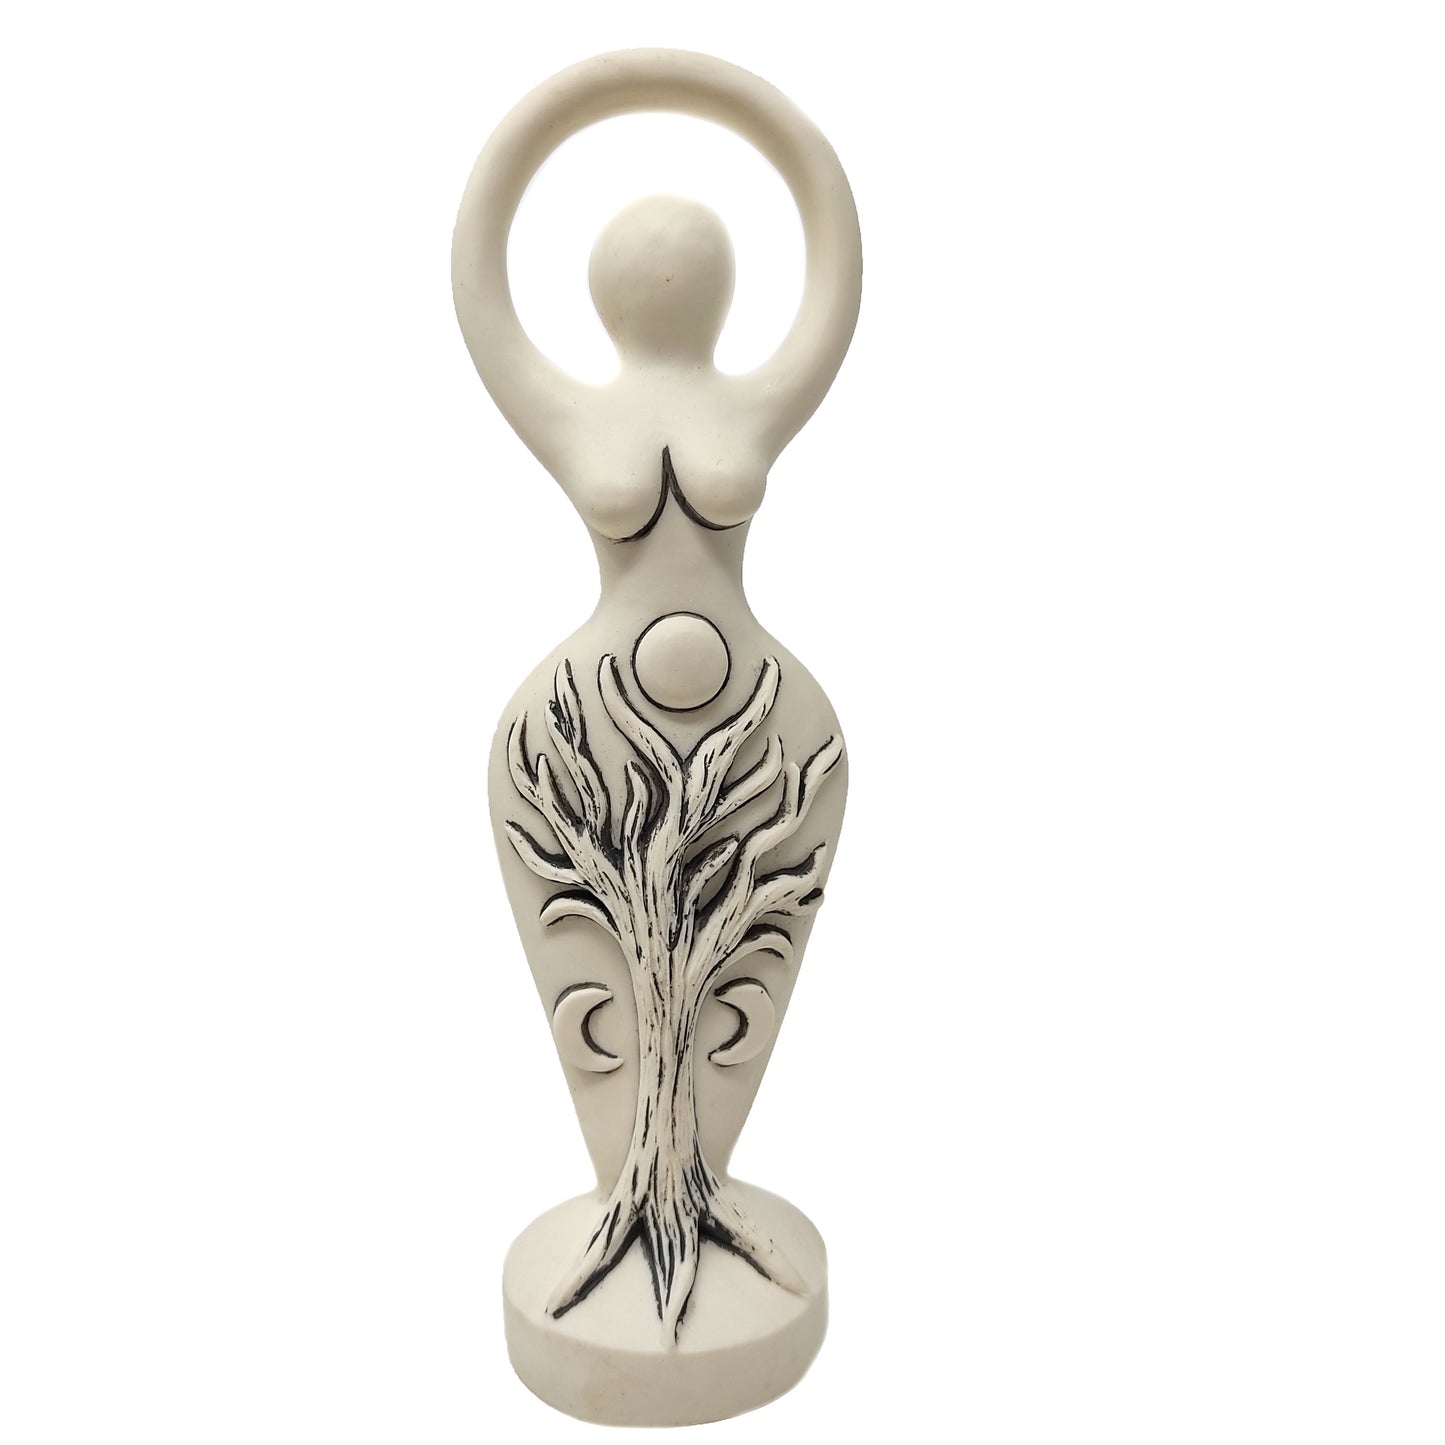 Spiral Goddess Statue Female Spirituality Wiccan Altar Figurine Decor Gift 7.5"